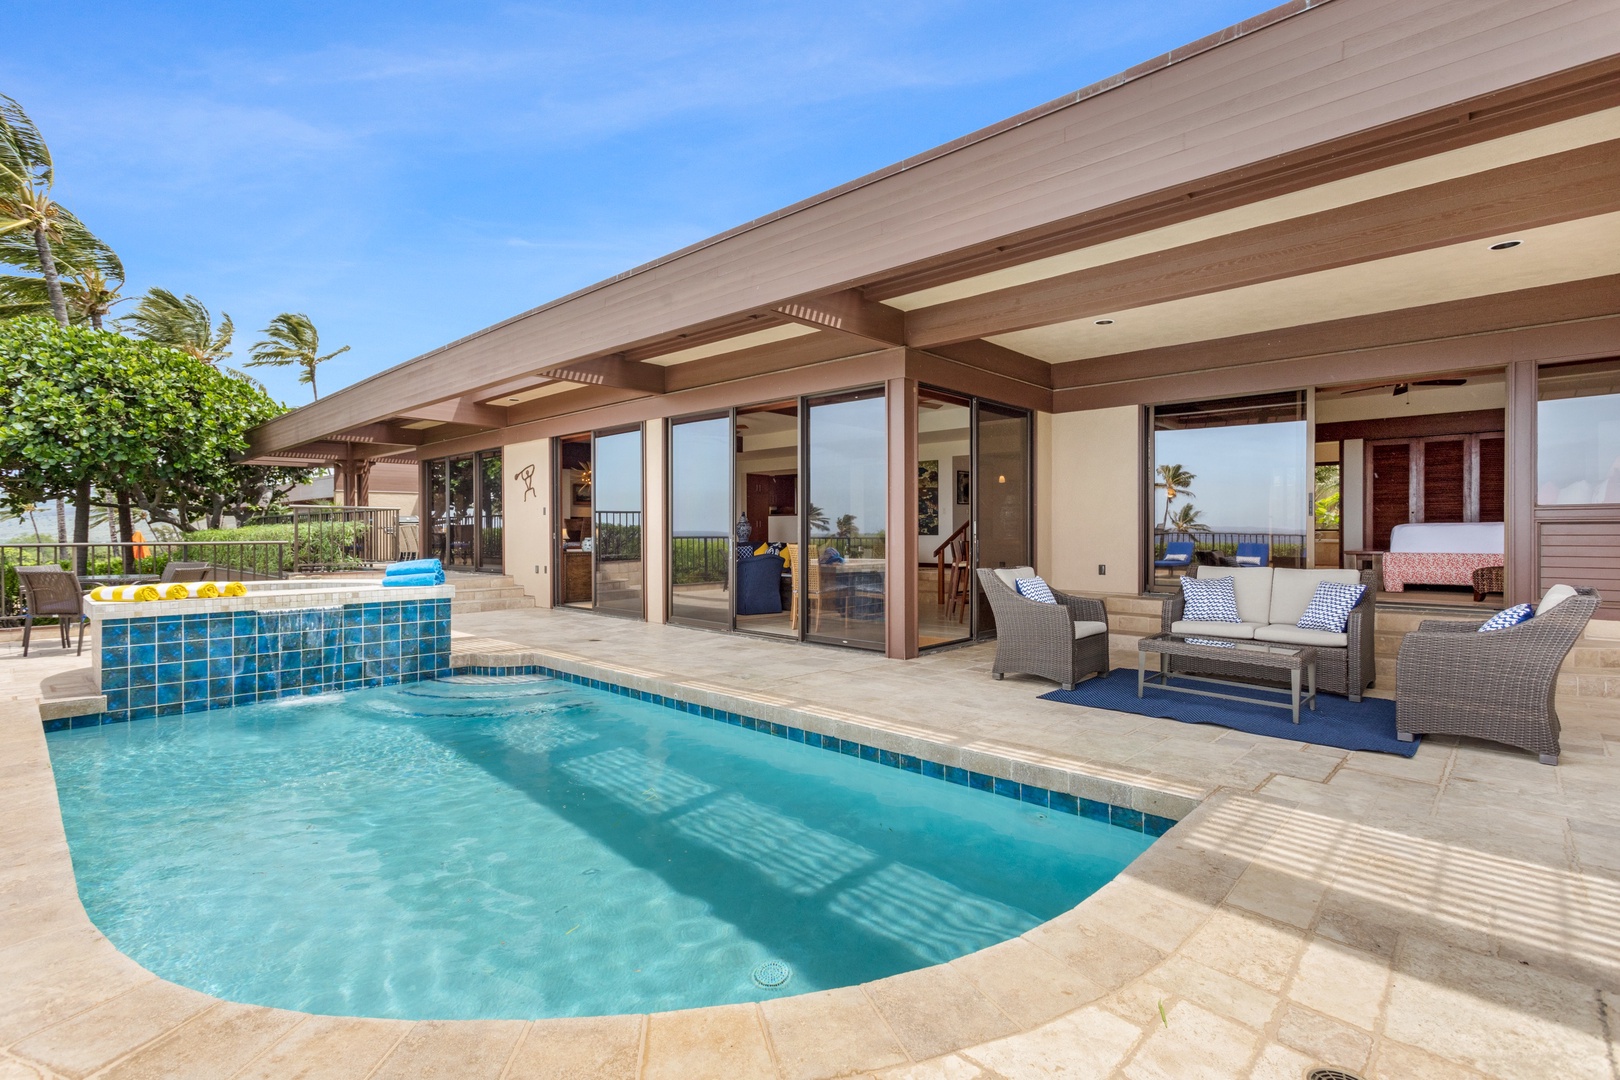 Kamuela Vacation Rentals, OFB 3BD Villas (39) at Mauna Kea Resort - View from pool deck back toward the home.